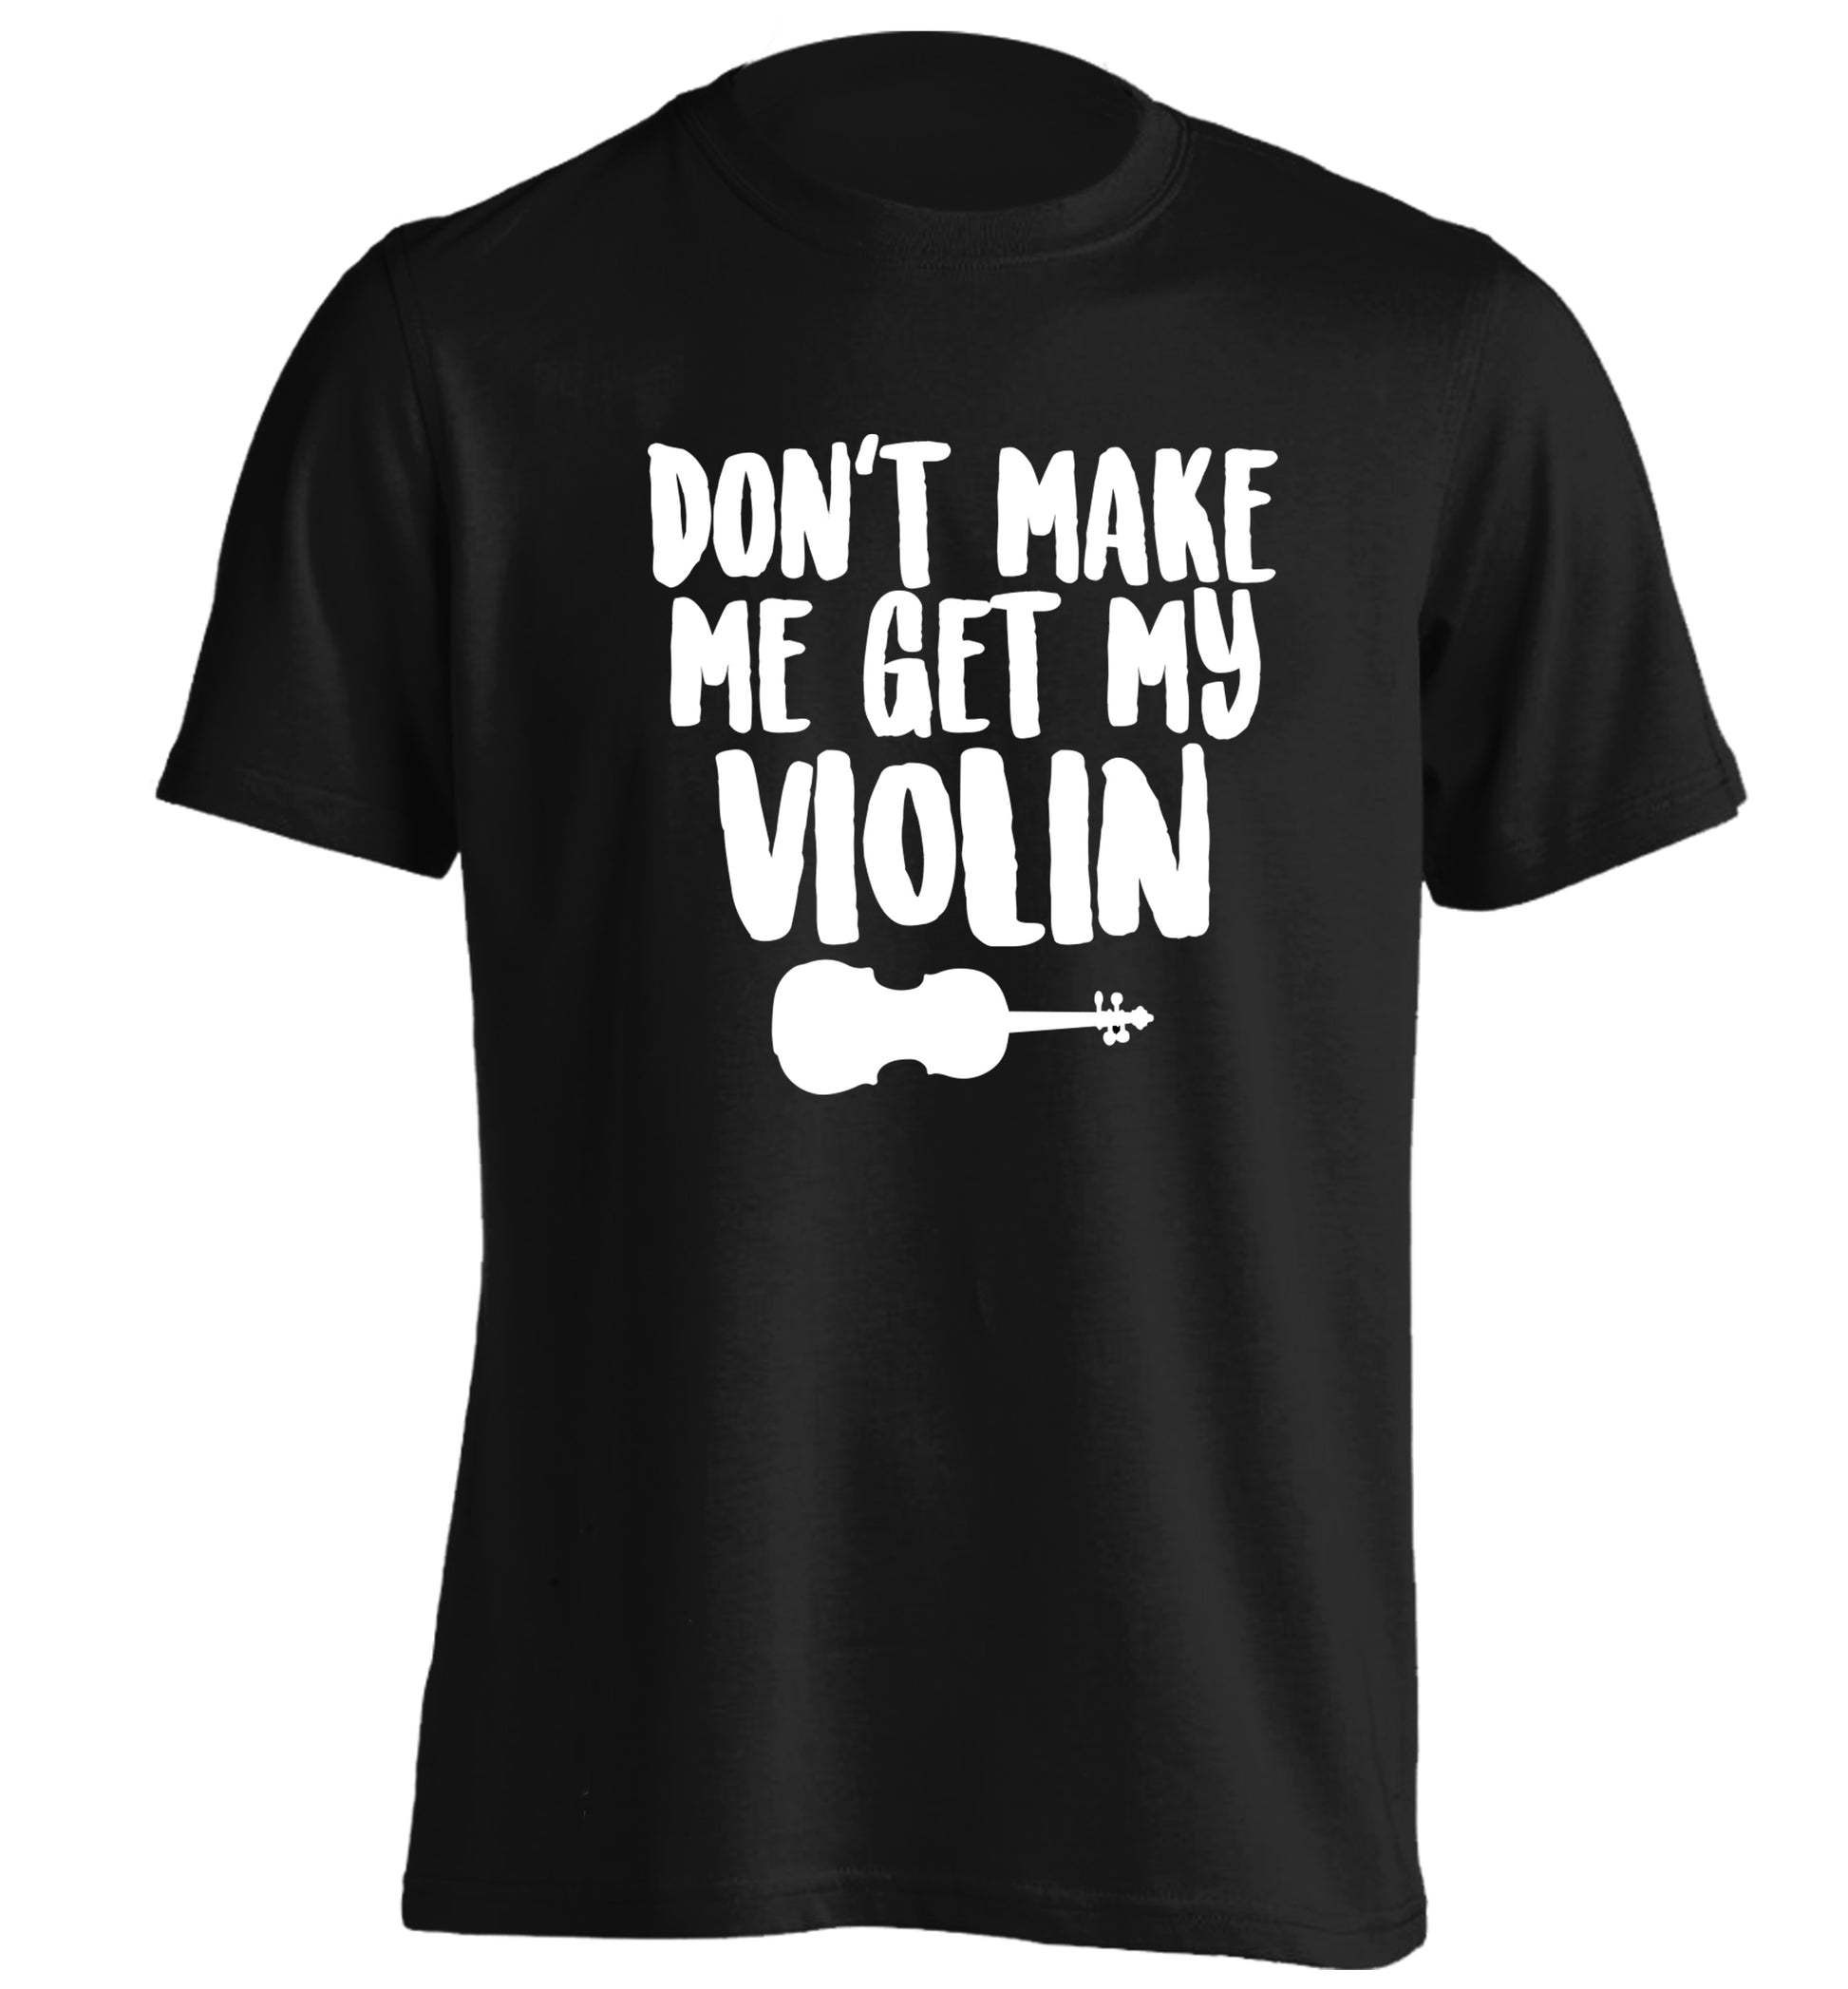 Don't make me get my violin adults unisex black Tshirt 2XL